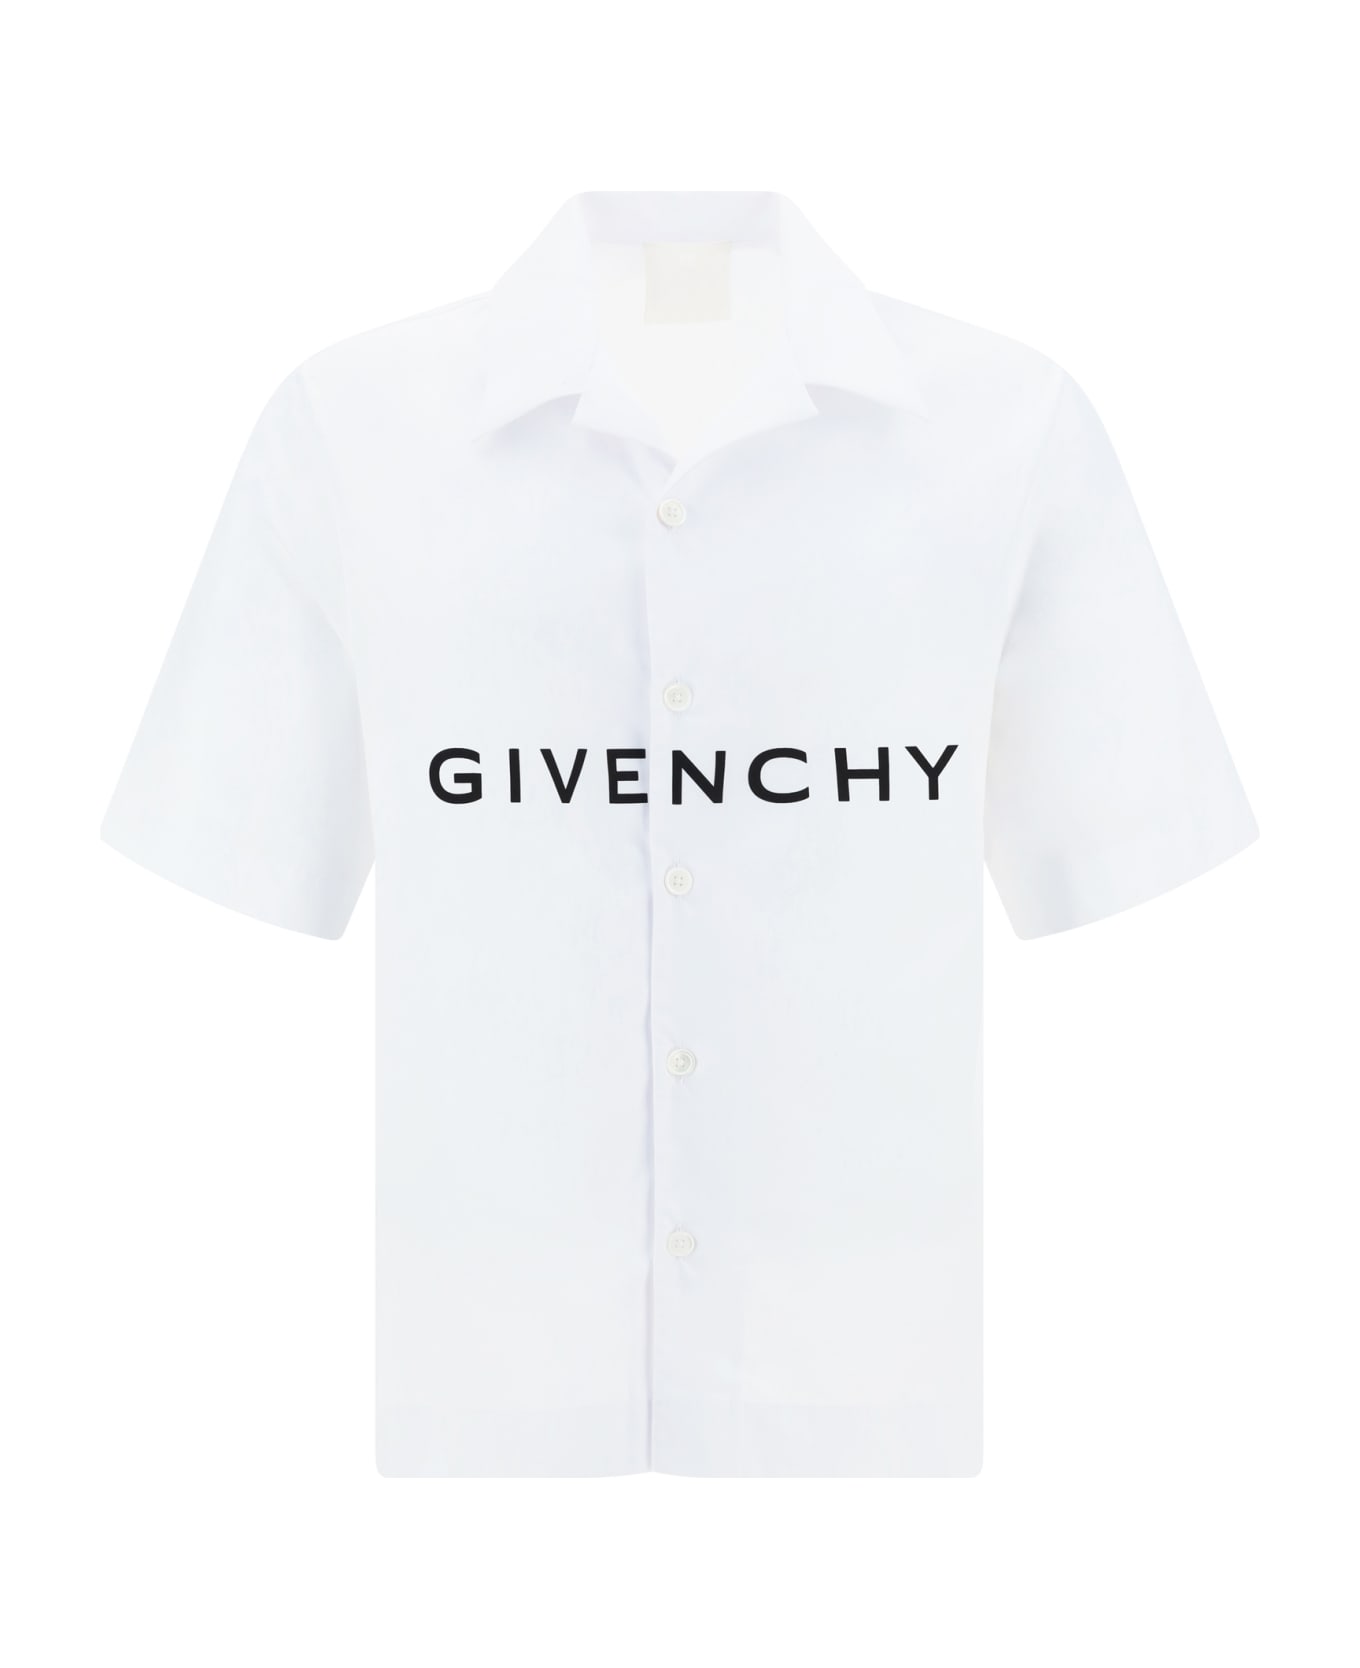 Givenchy Boxy Shirt - White/black